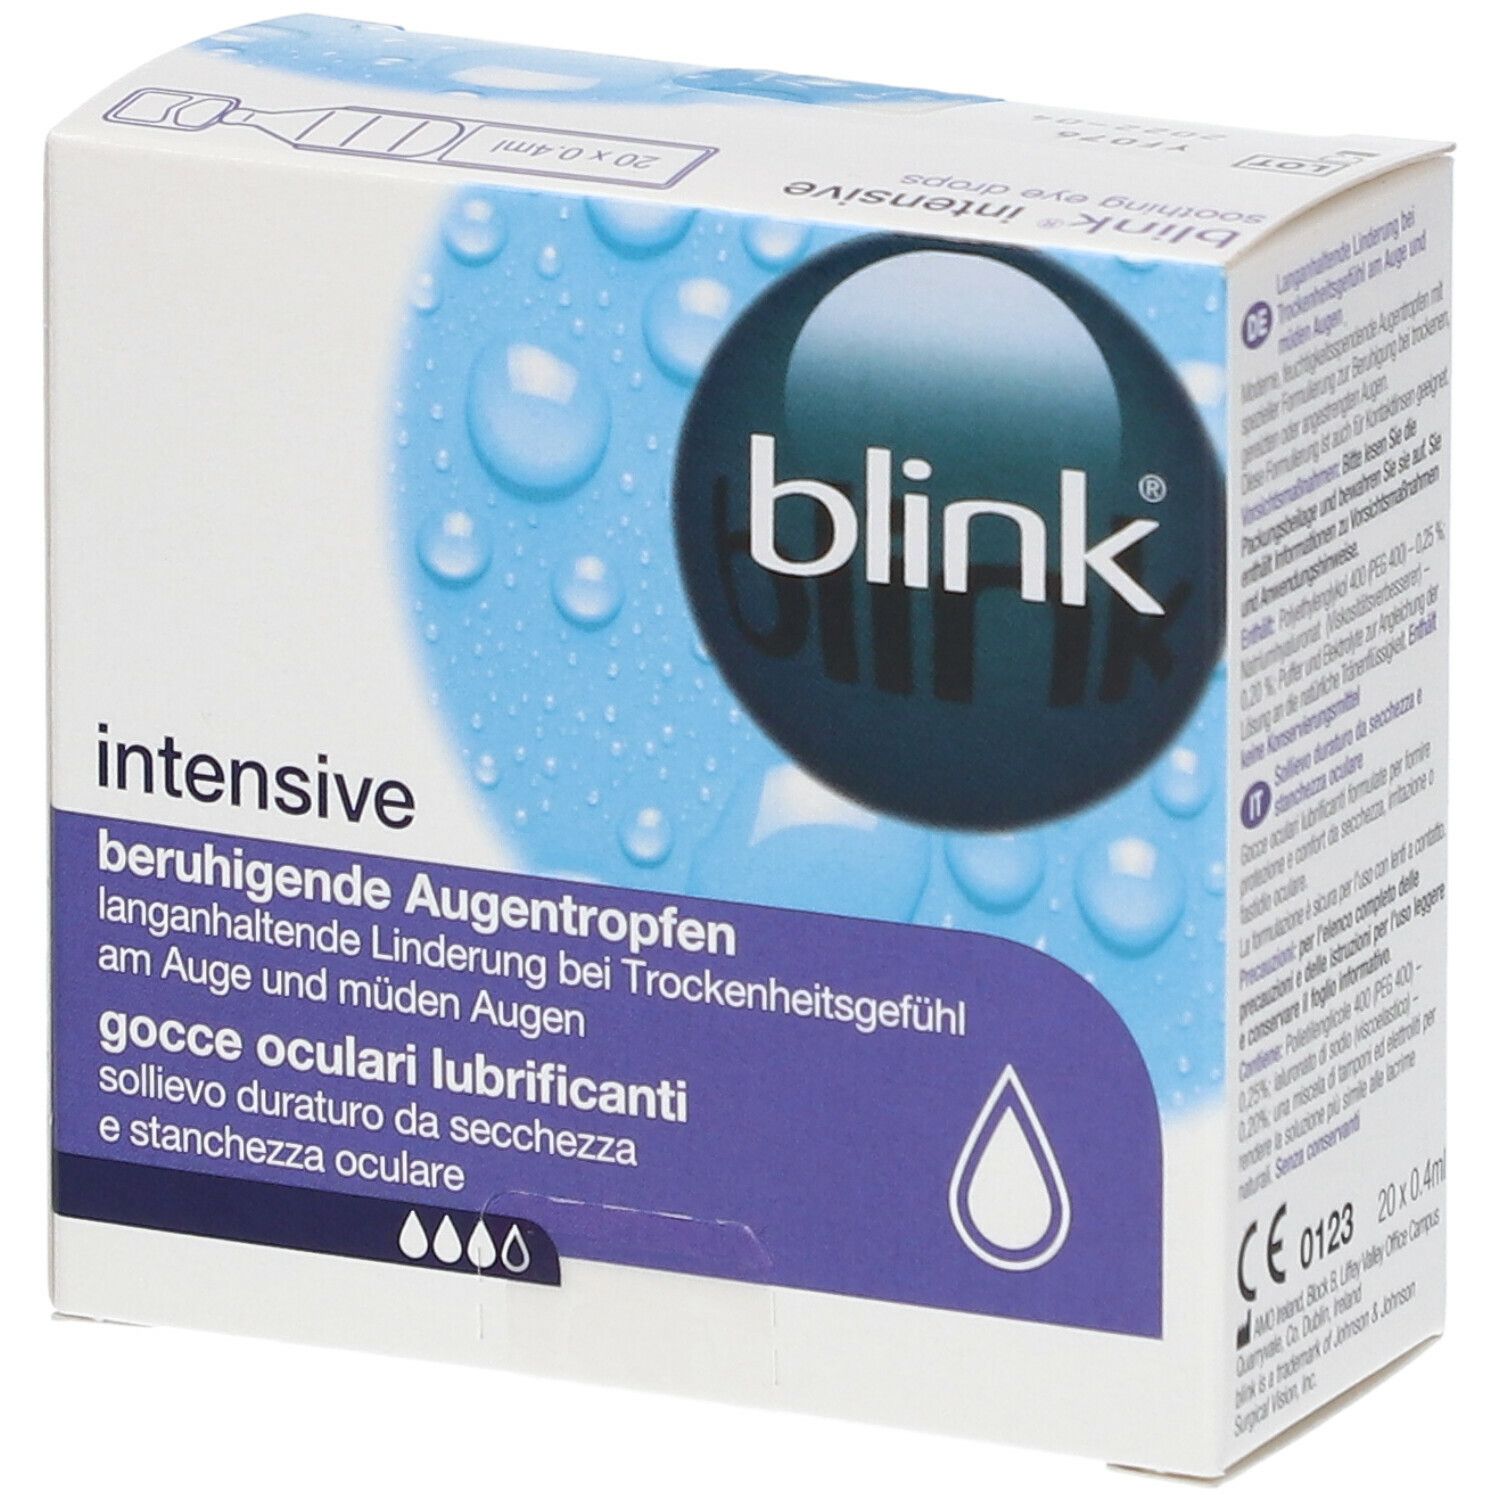 Blink® Intensive Beruhigende Augentropfen